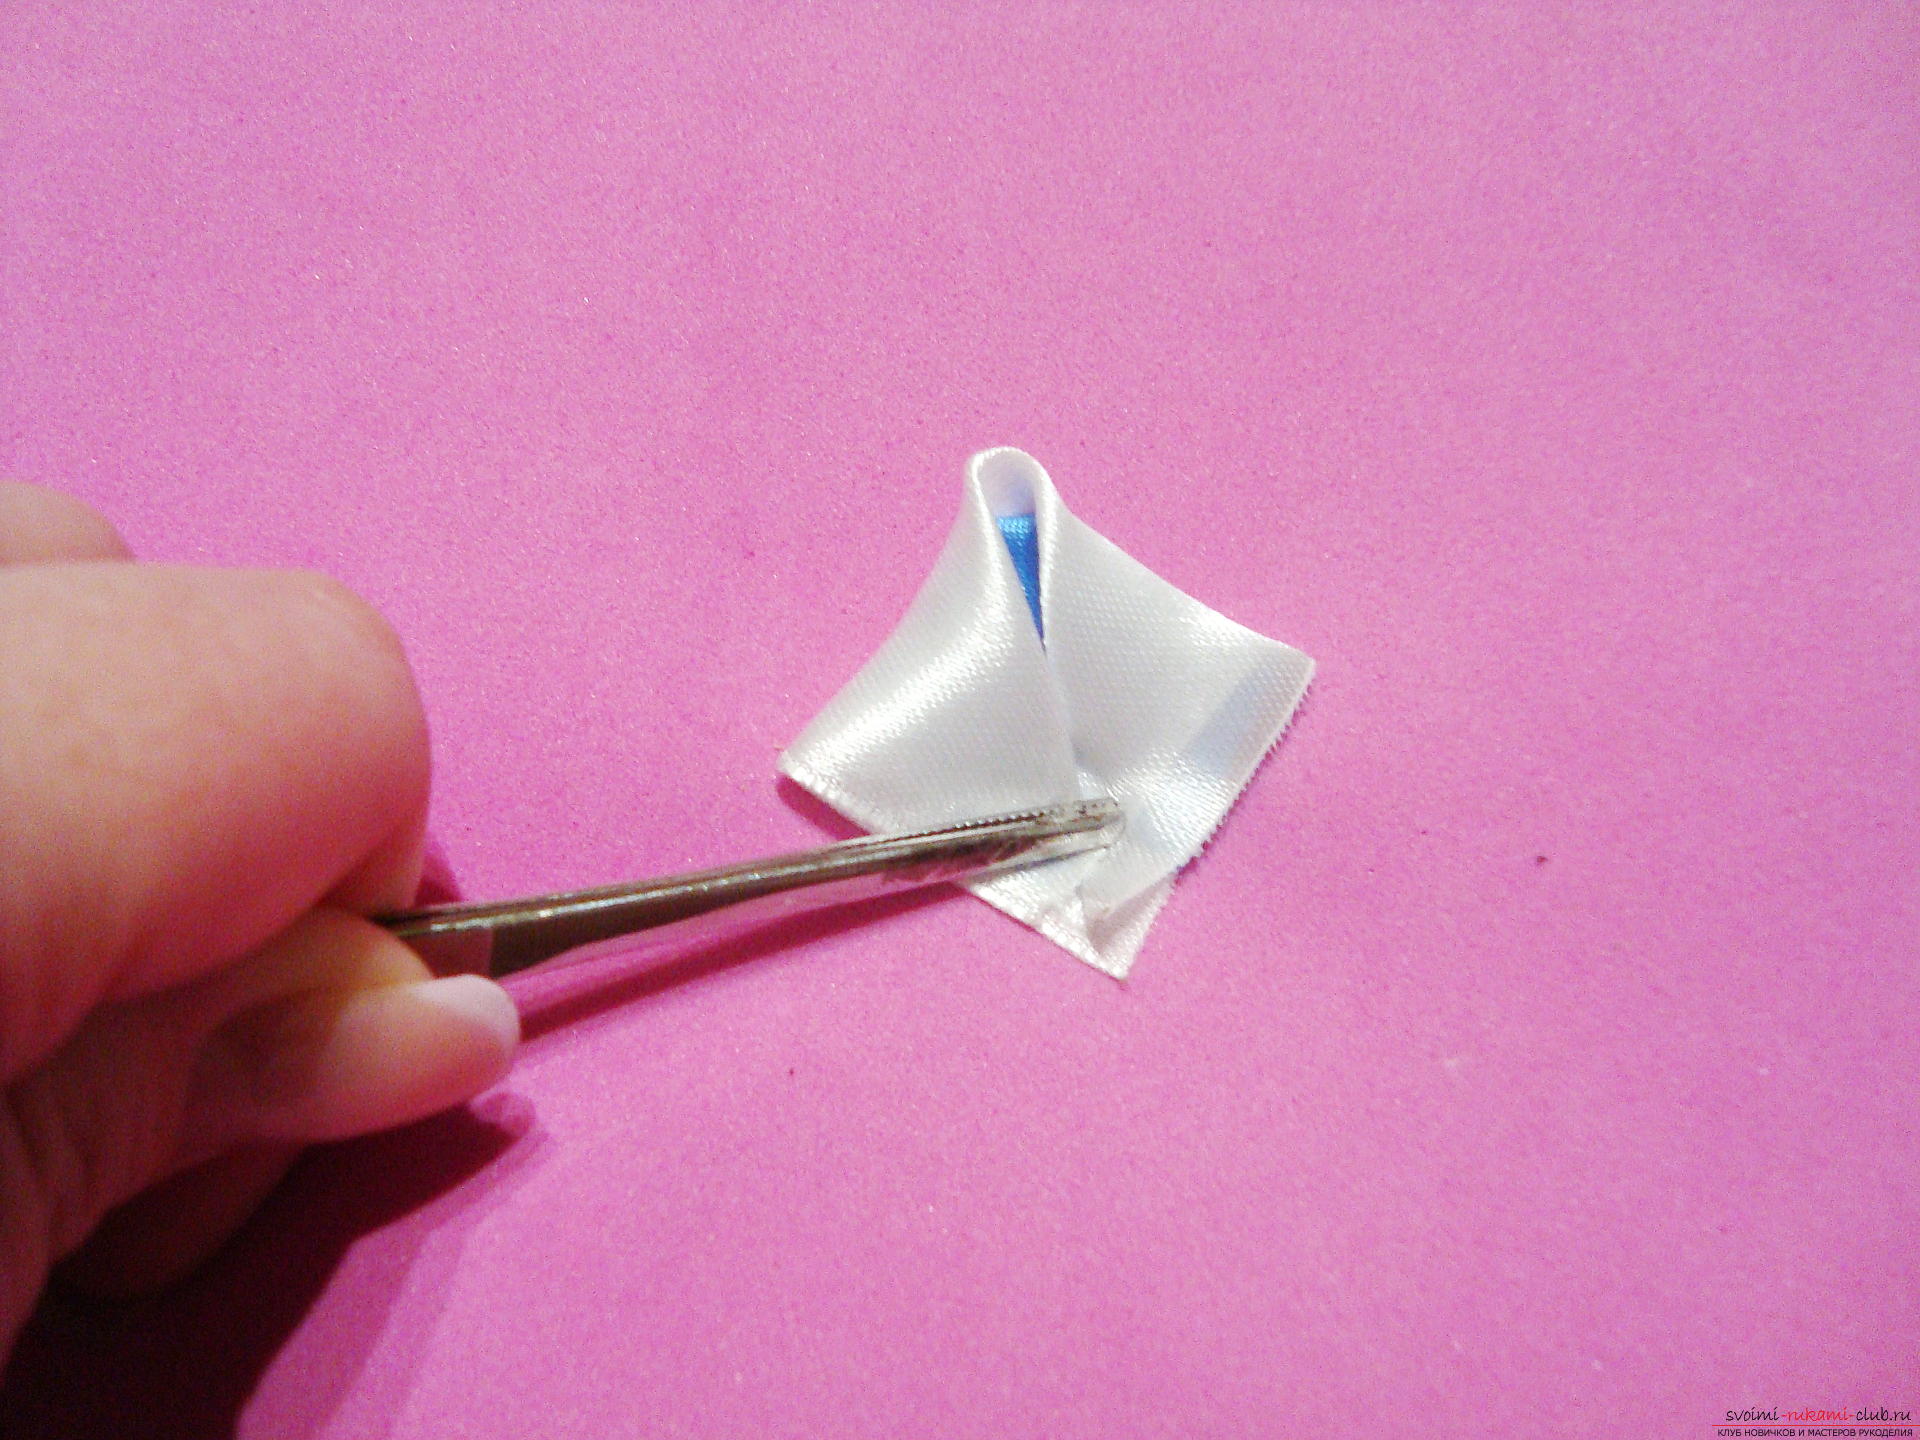 Фото инструкция по изготовлению заколки из лент голубого цвета в технике канзаши. Фото №6